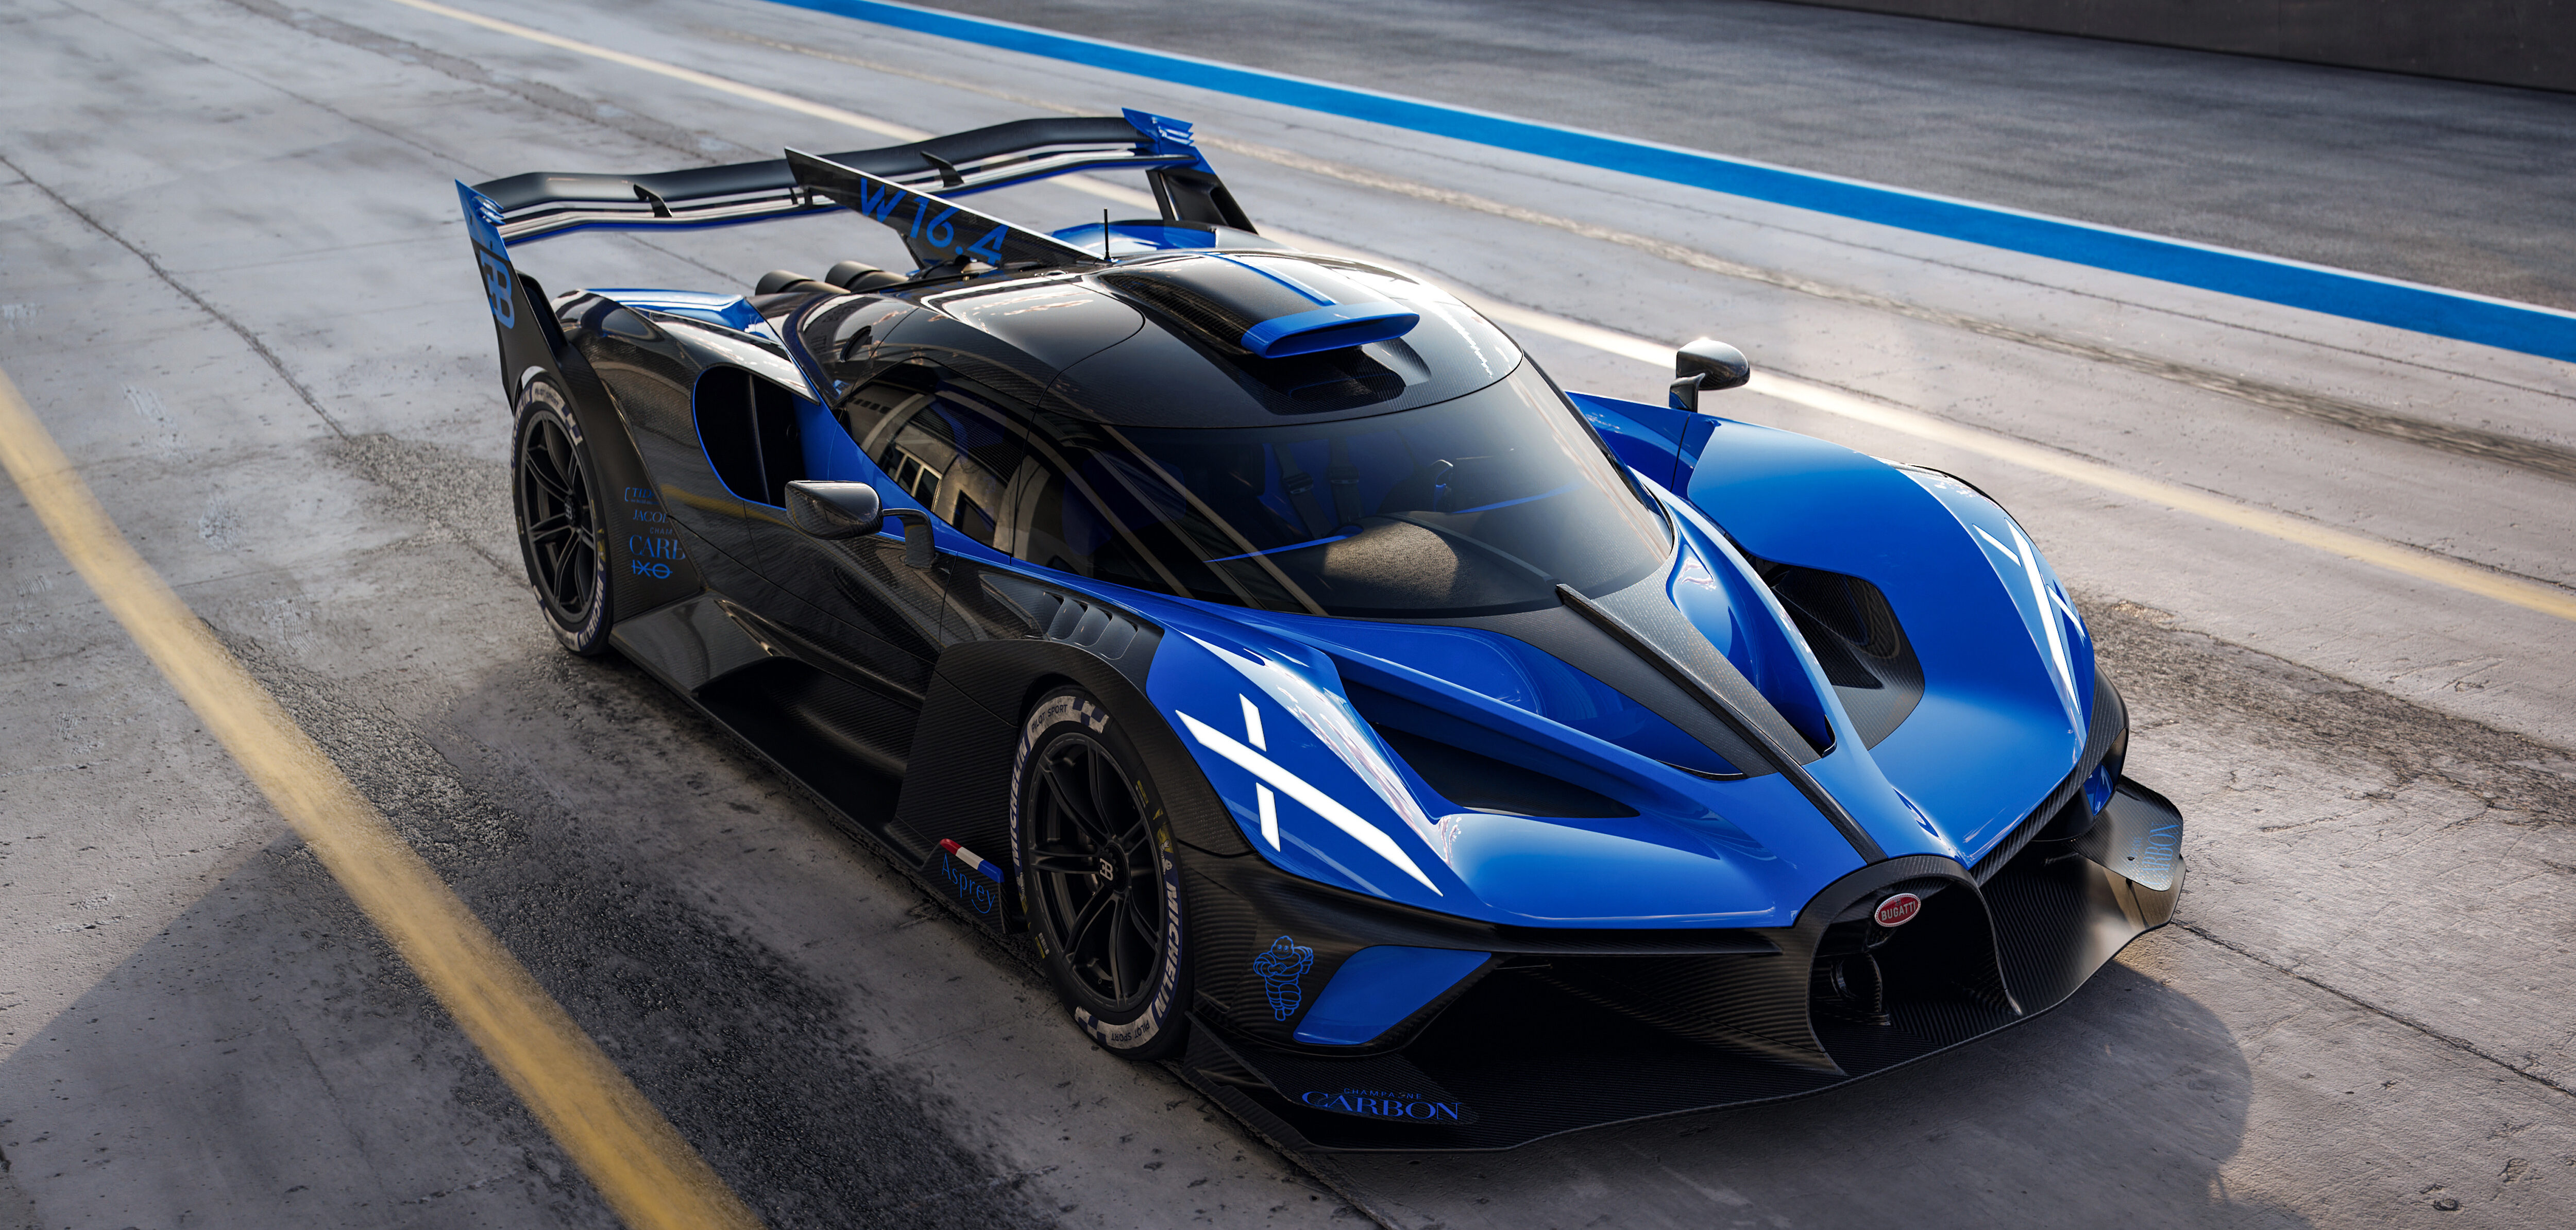 Bugatti Bolide begins next stage of testing | Automotive Testing ...